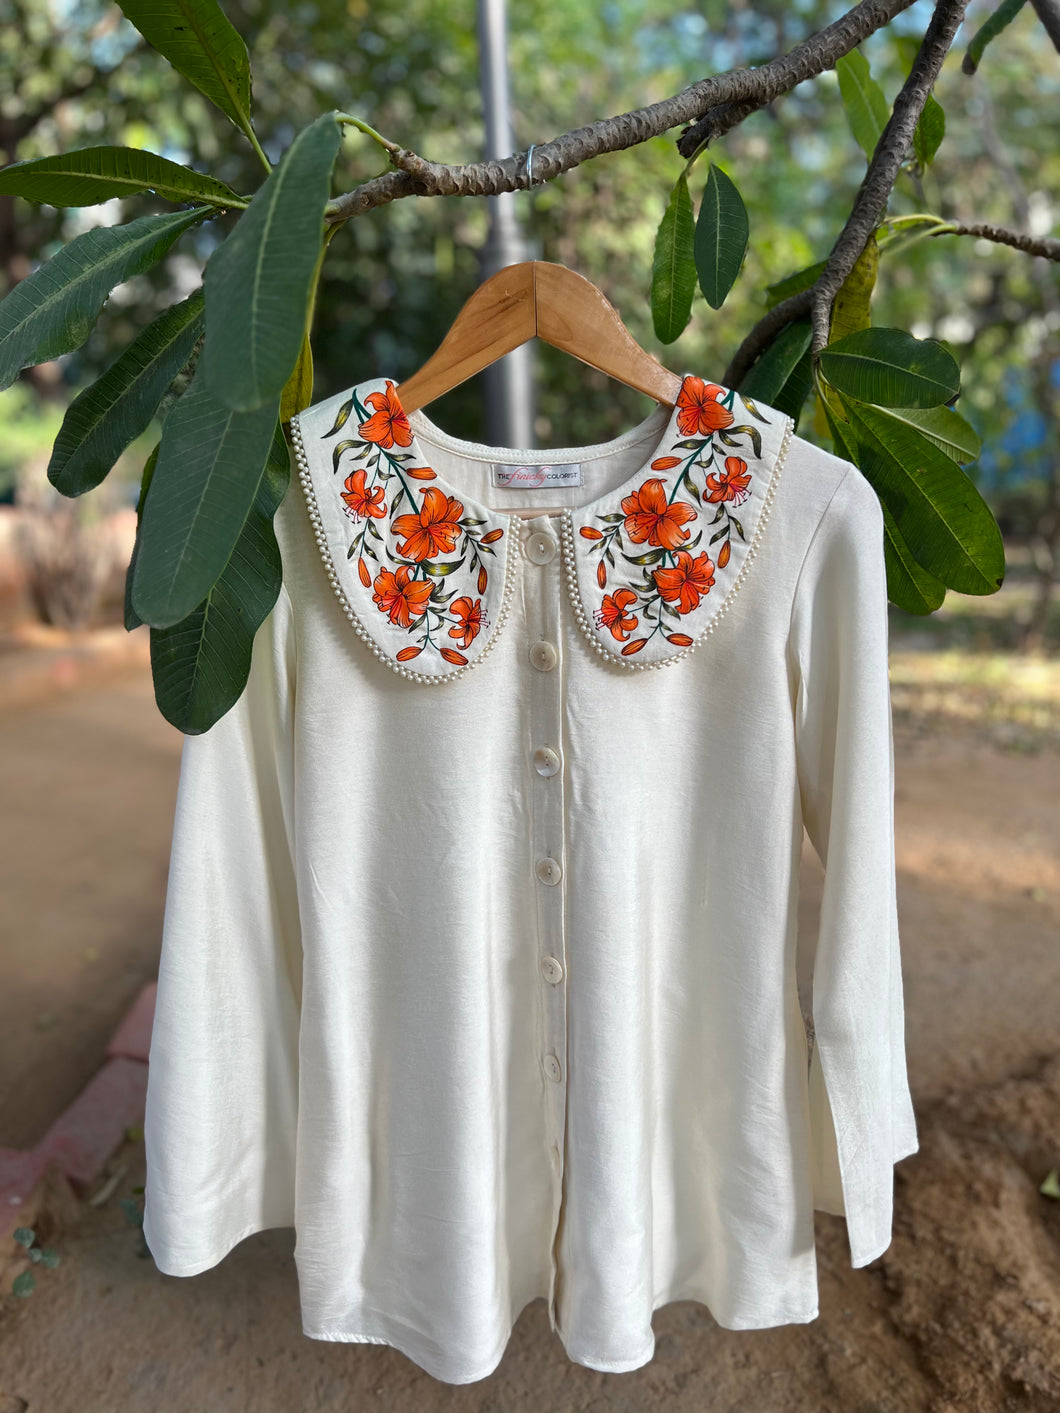 Tiger Lily Shirt